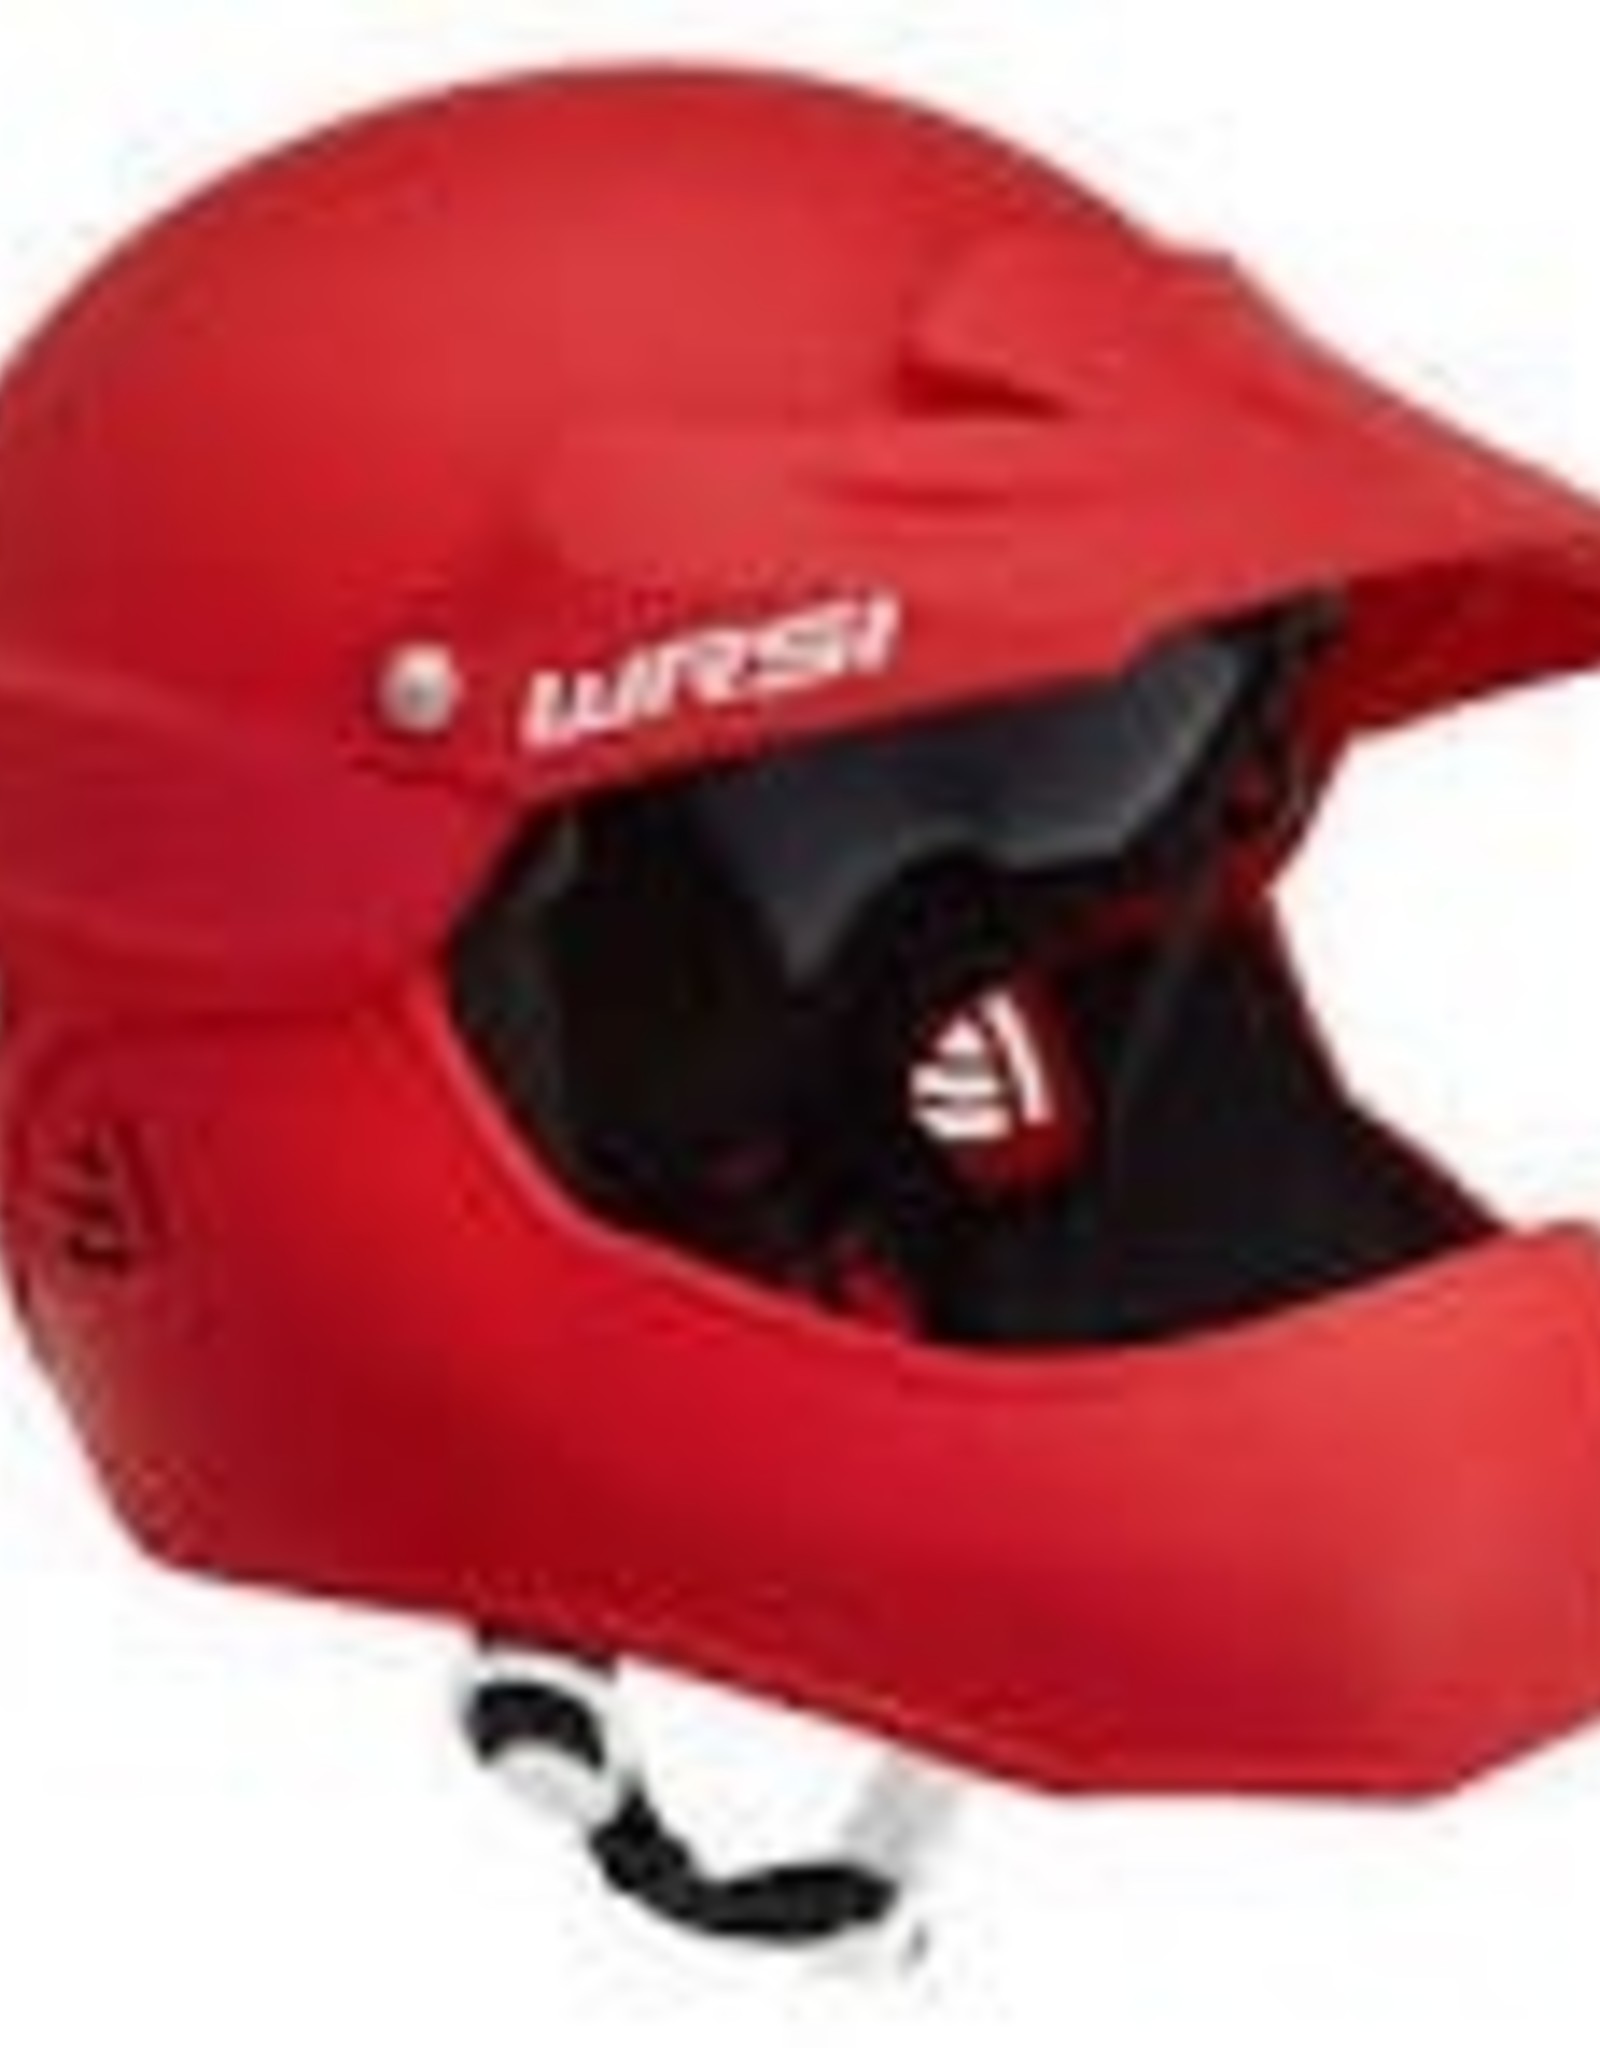 WRSI WRSI Moment Fullface Helmet Without Vents